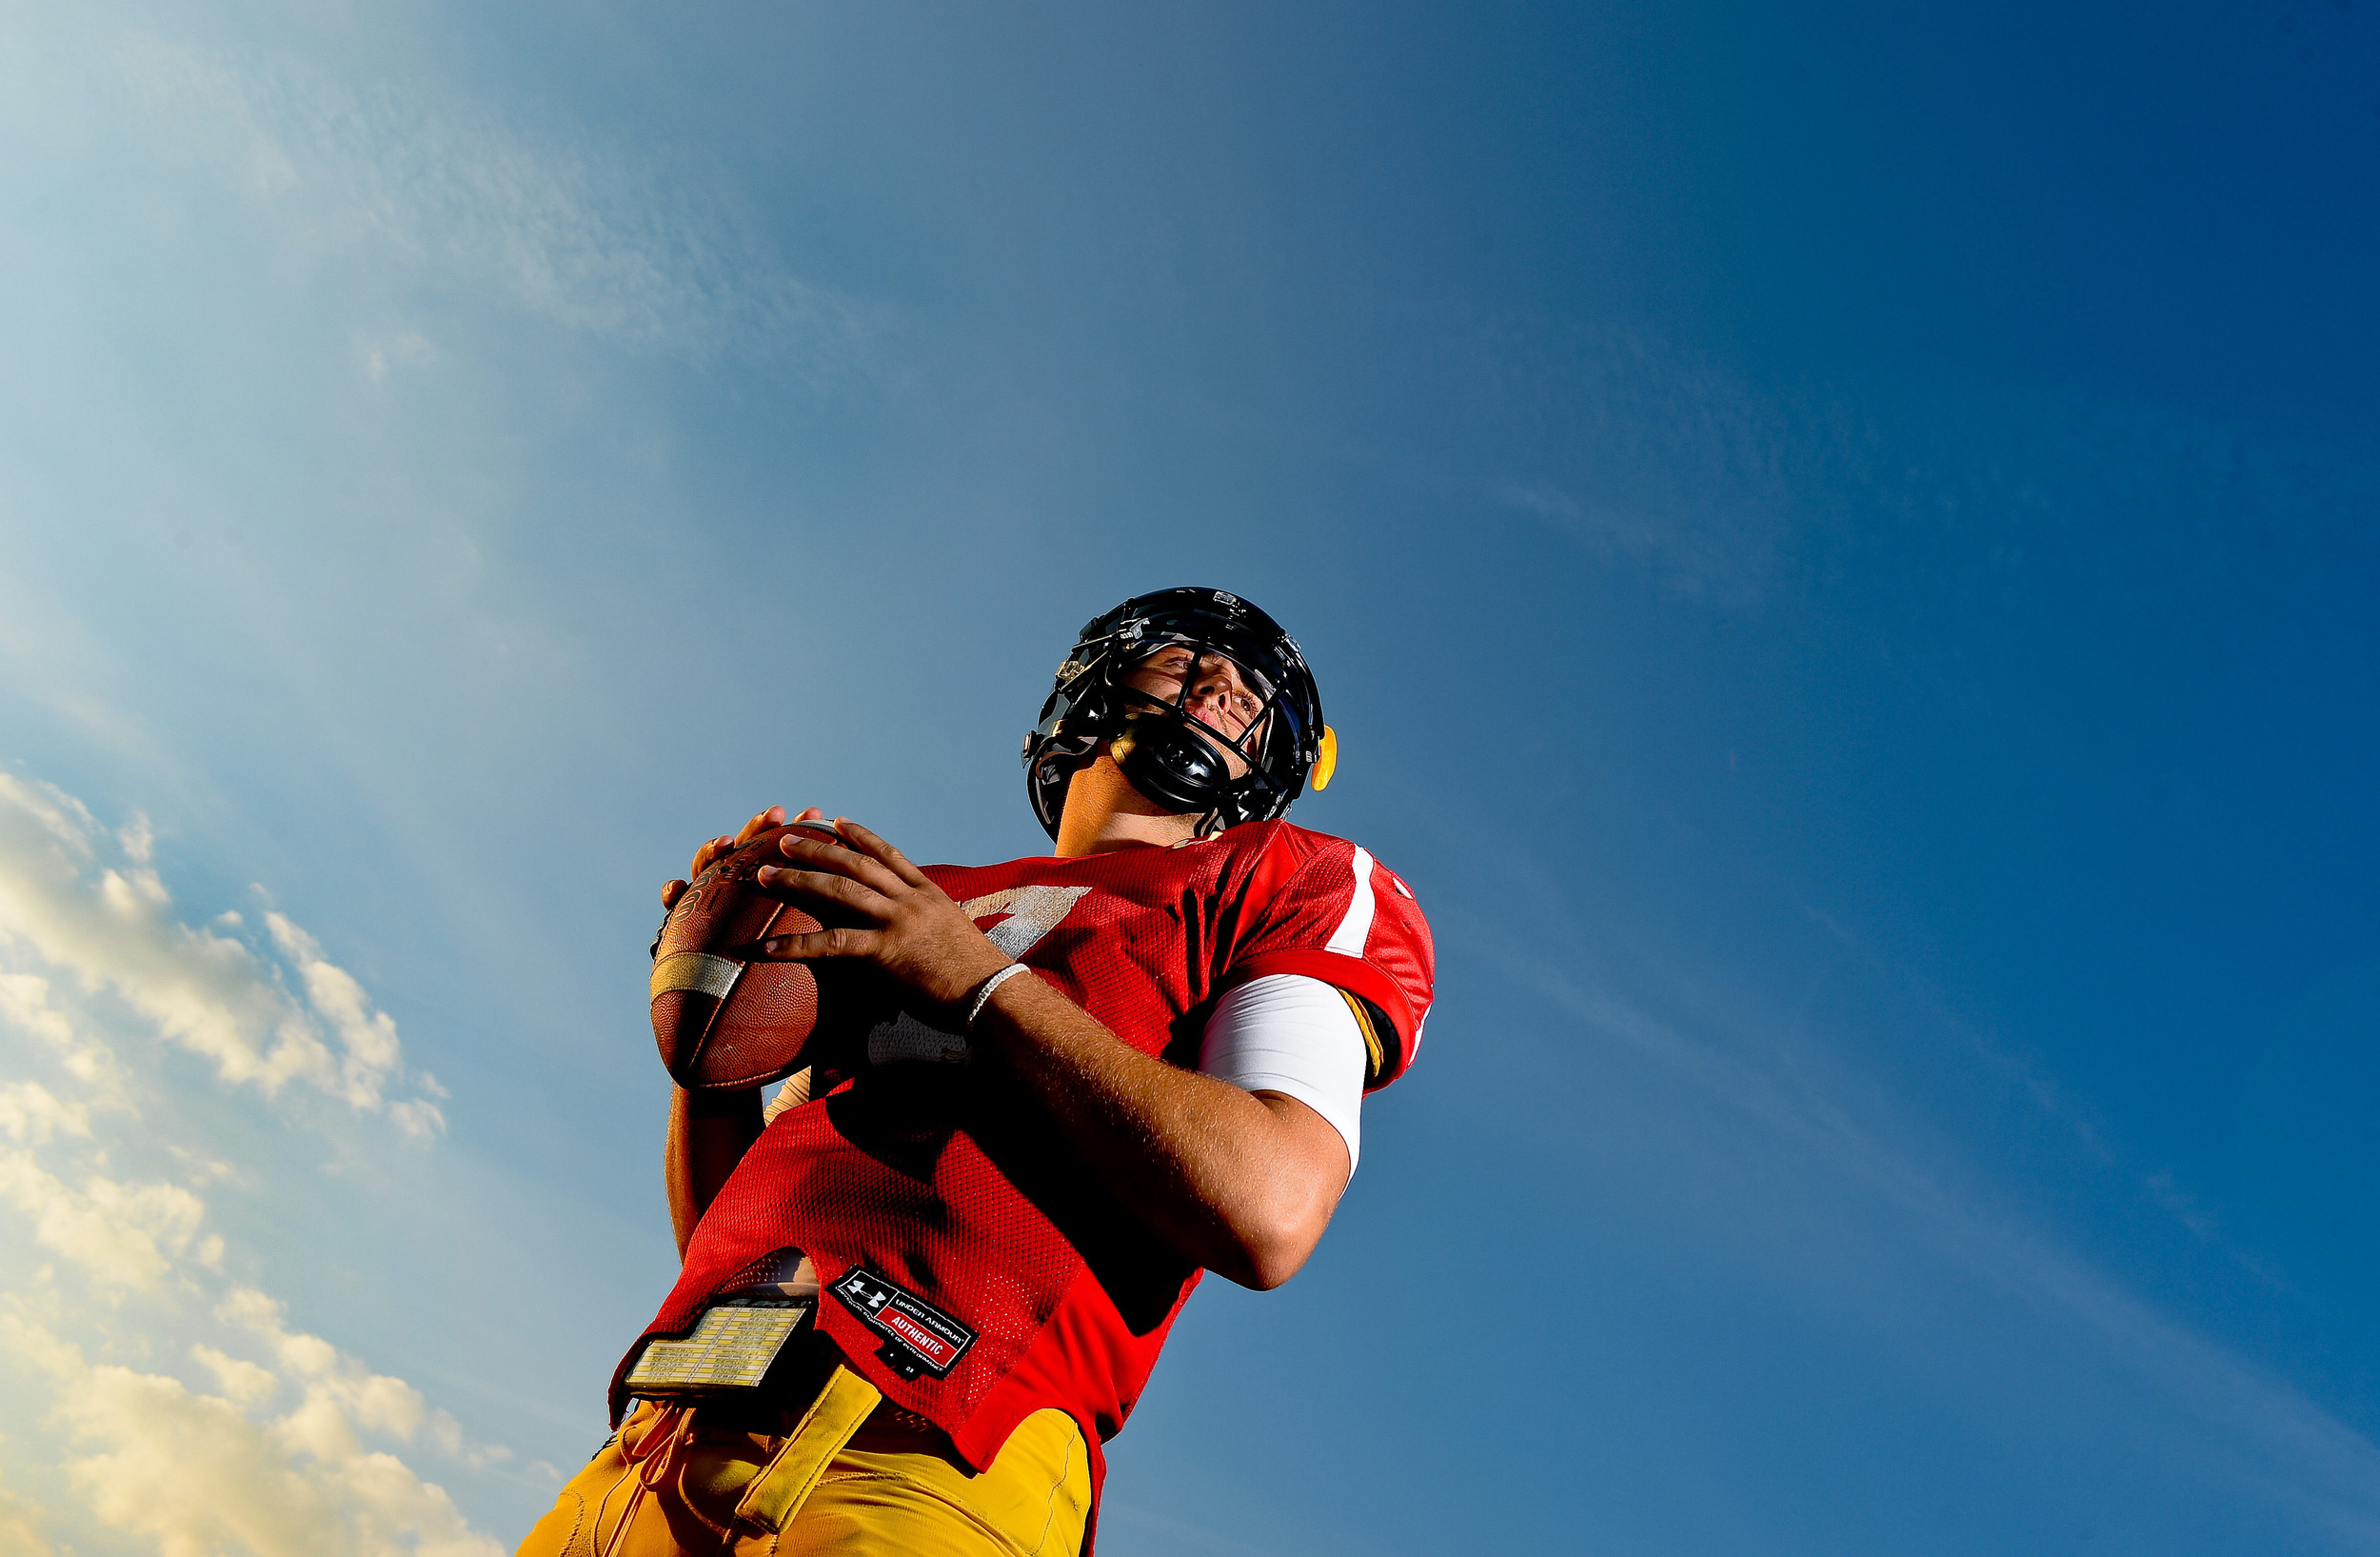  Towson University quarterback Peter Athens poses at Johnny Unitas Stadium on Oct. 1, 2013 in Baltimore, Md.  